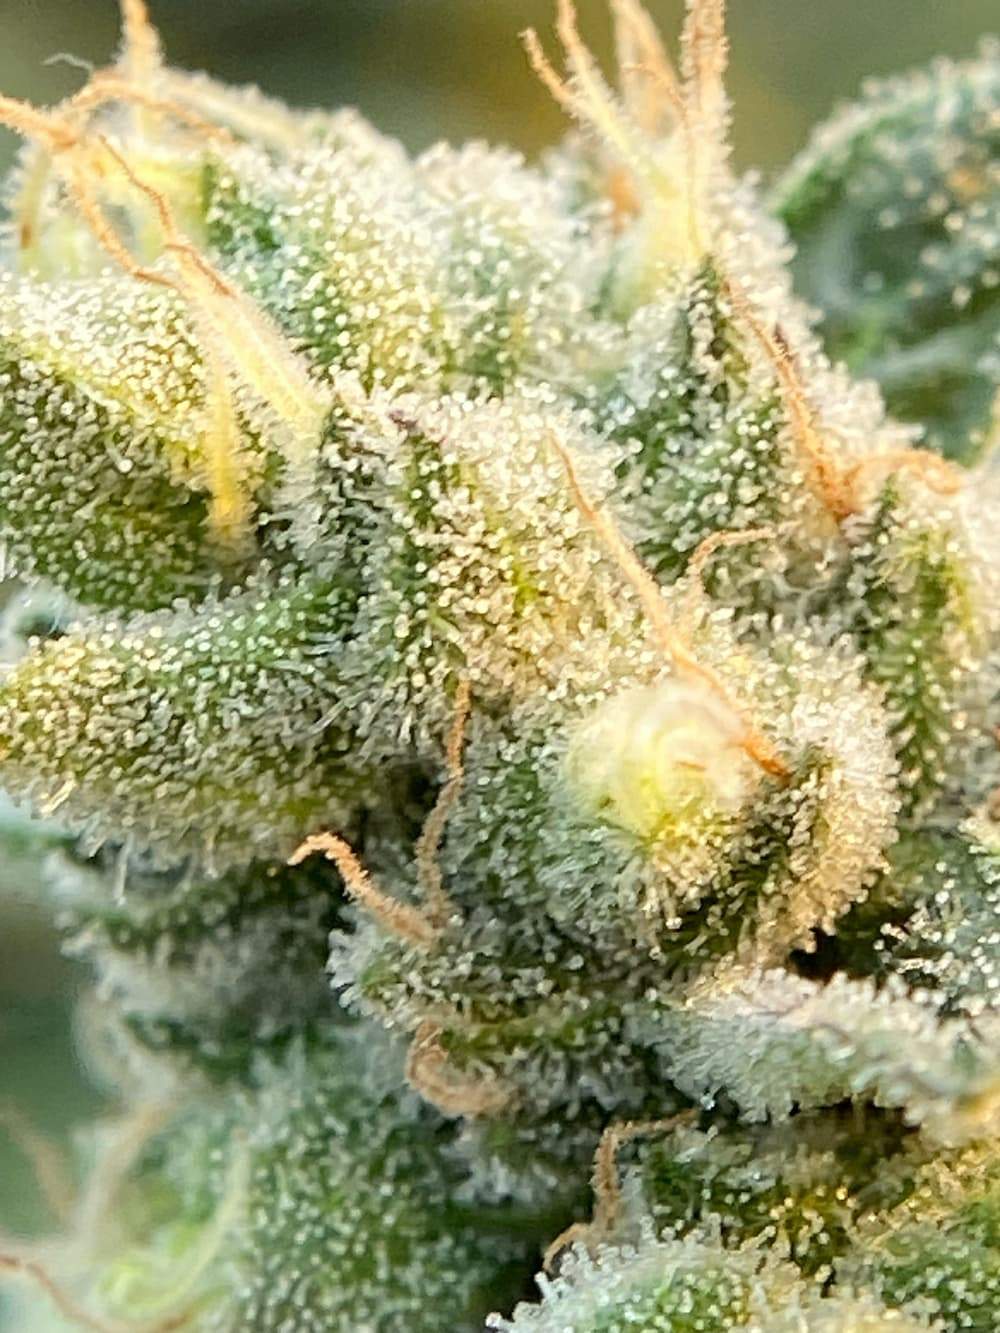 super close up image of marijuana bud, looks frosted